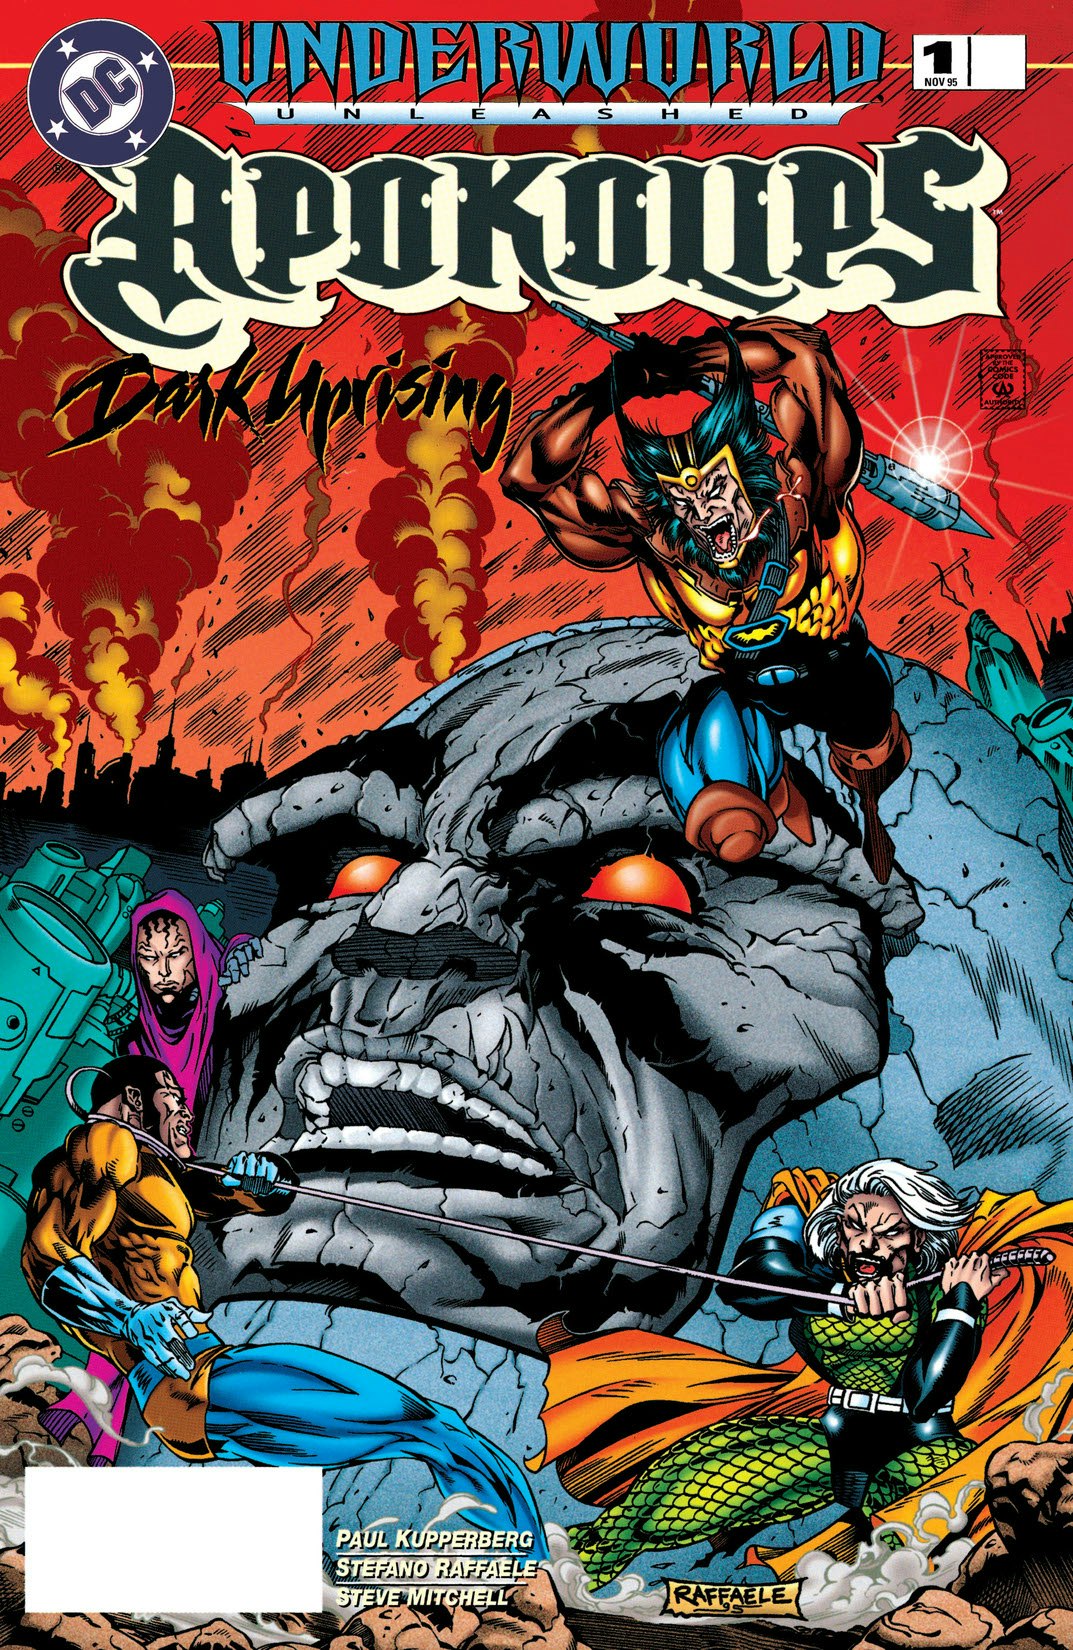 Underworld #1 December 1987 DC Comics